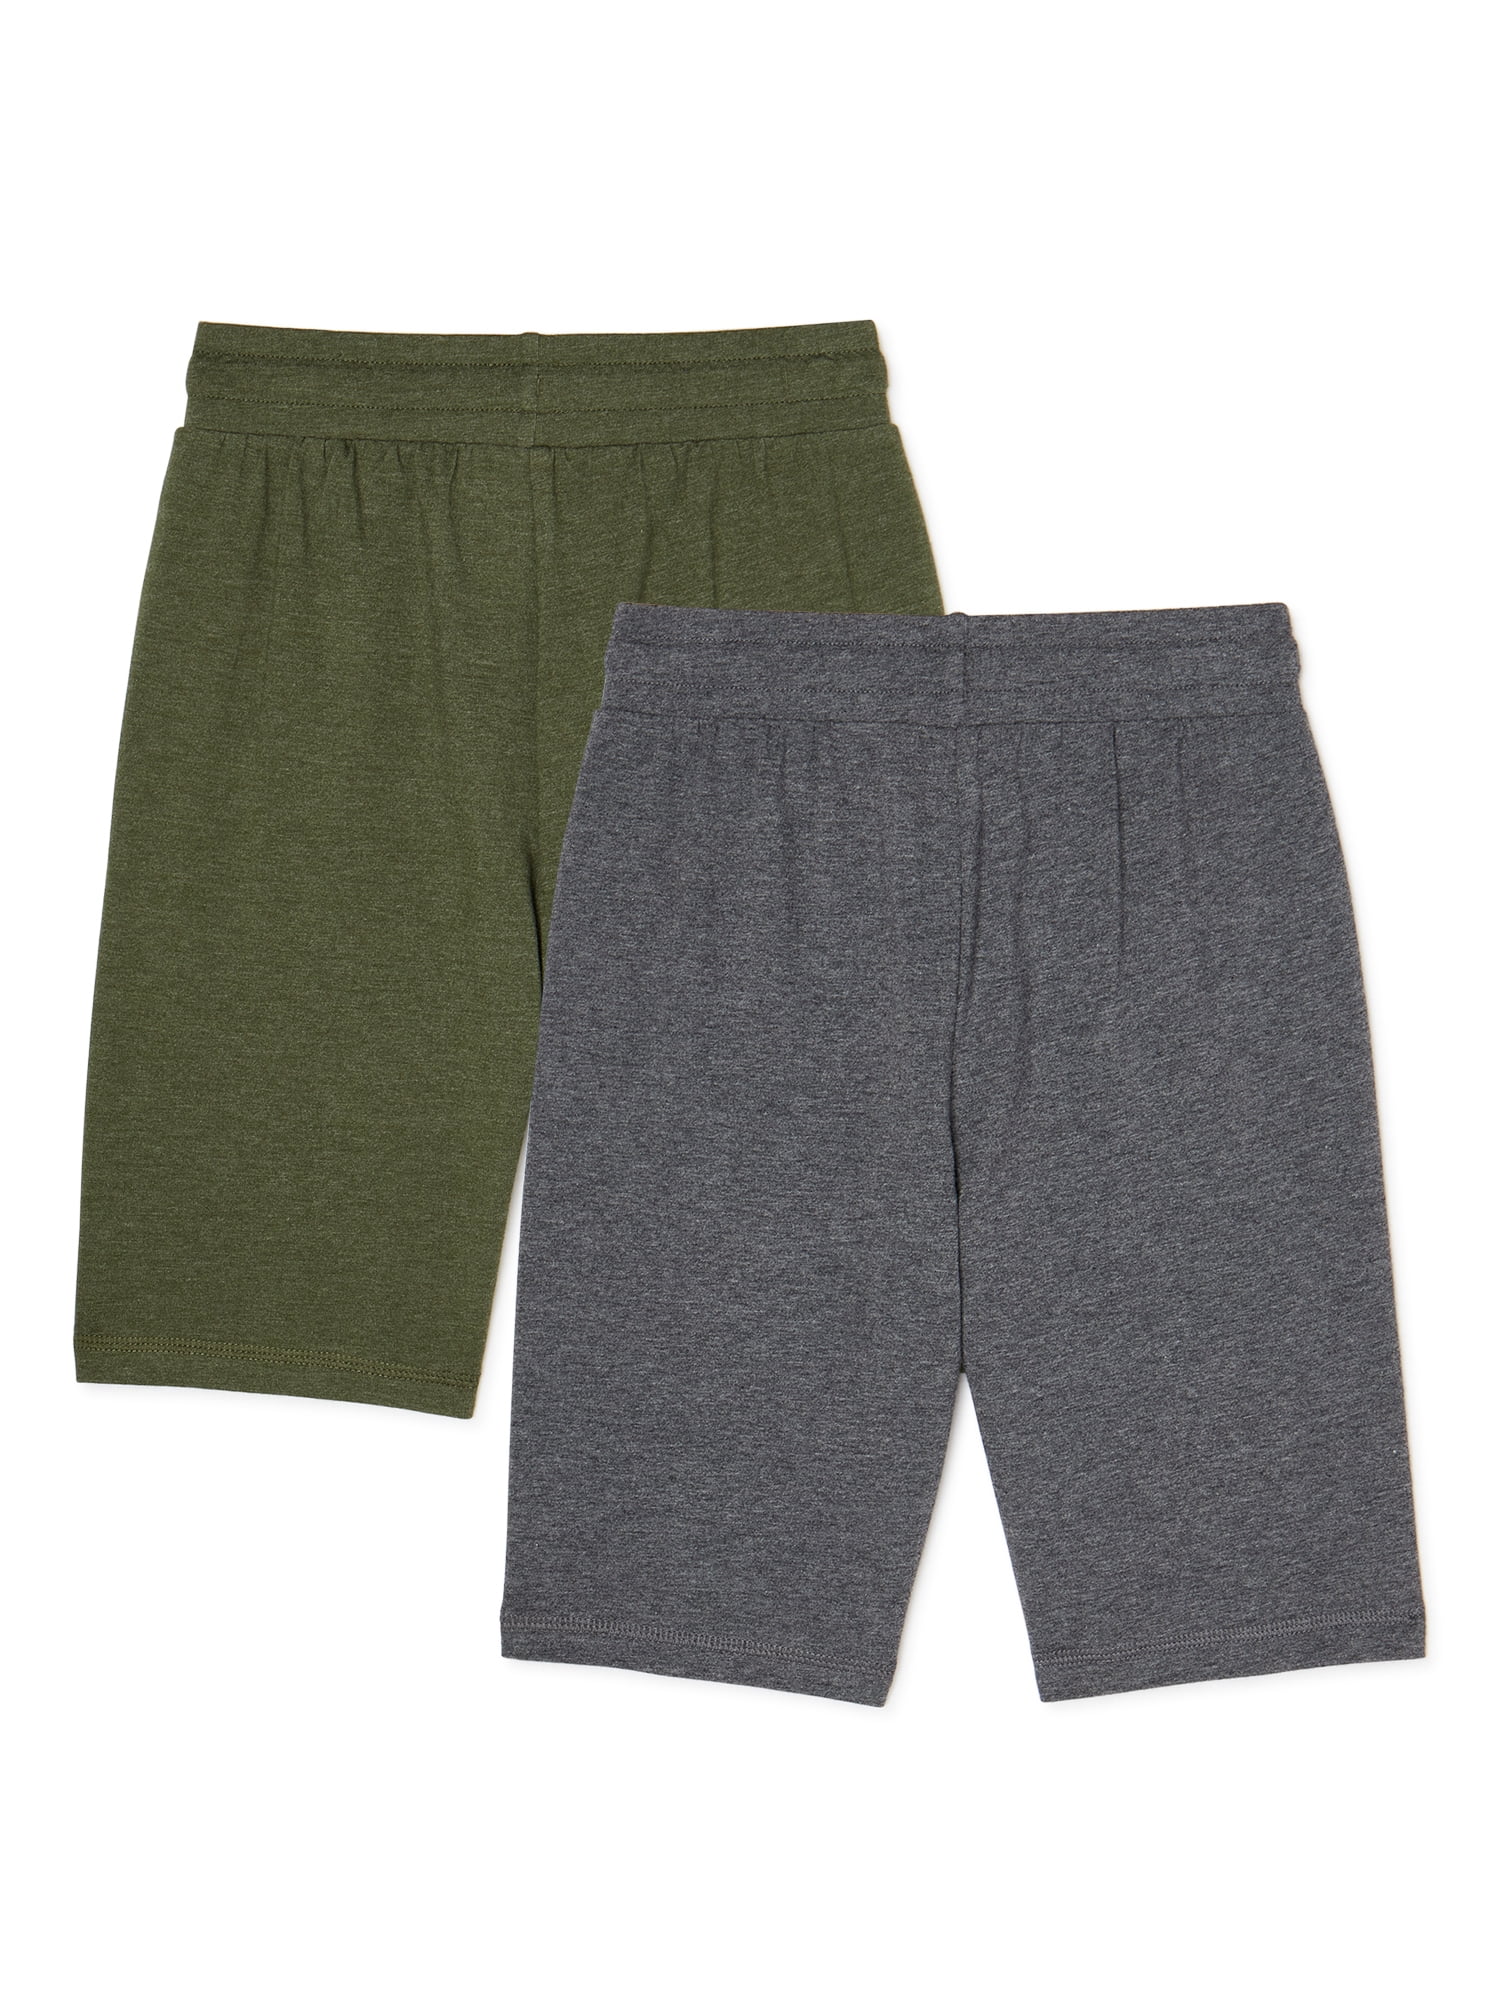 Spring&Gege Boys Soft Cotton Knit Jersey Shorts 2-Pack 